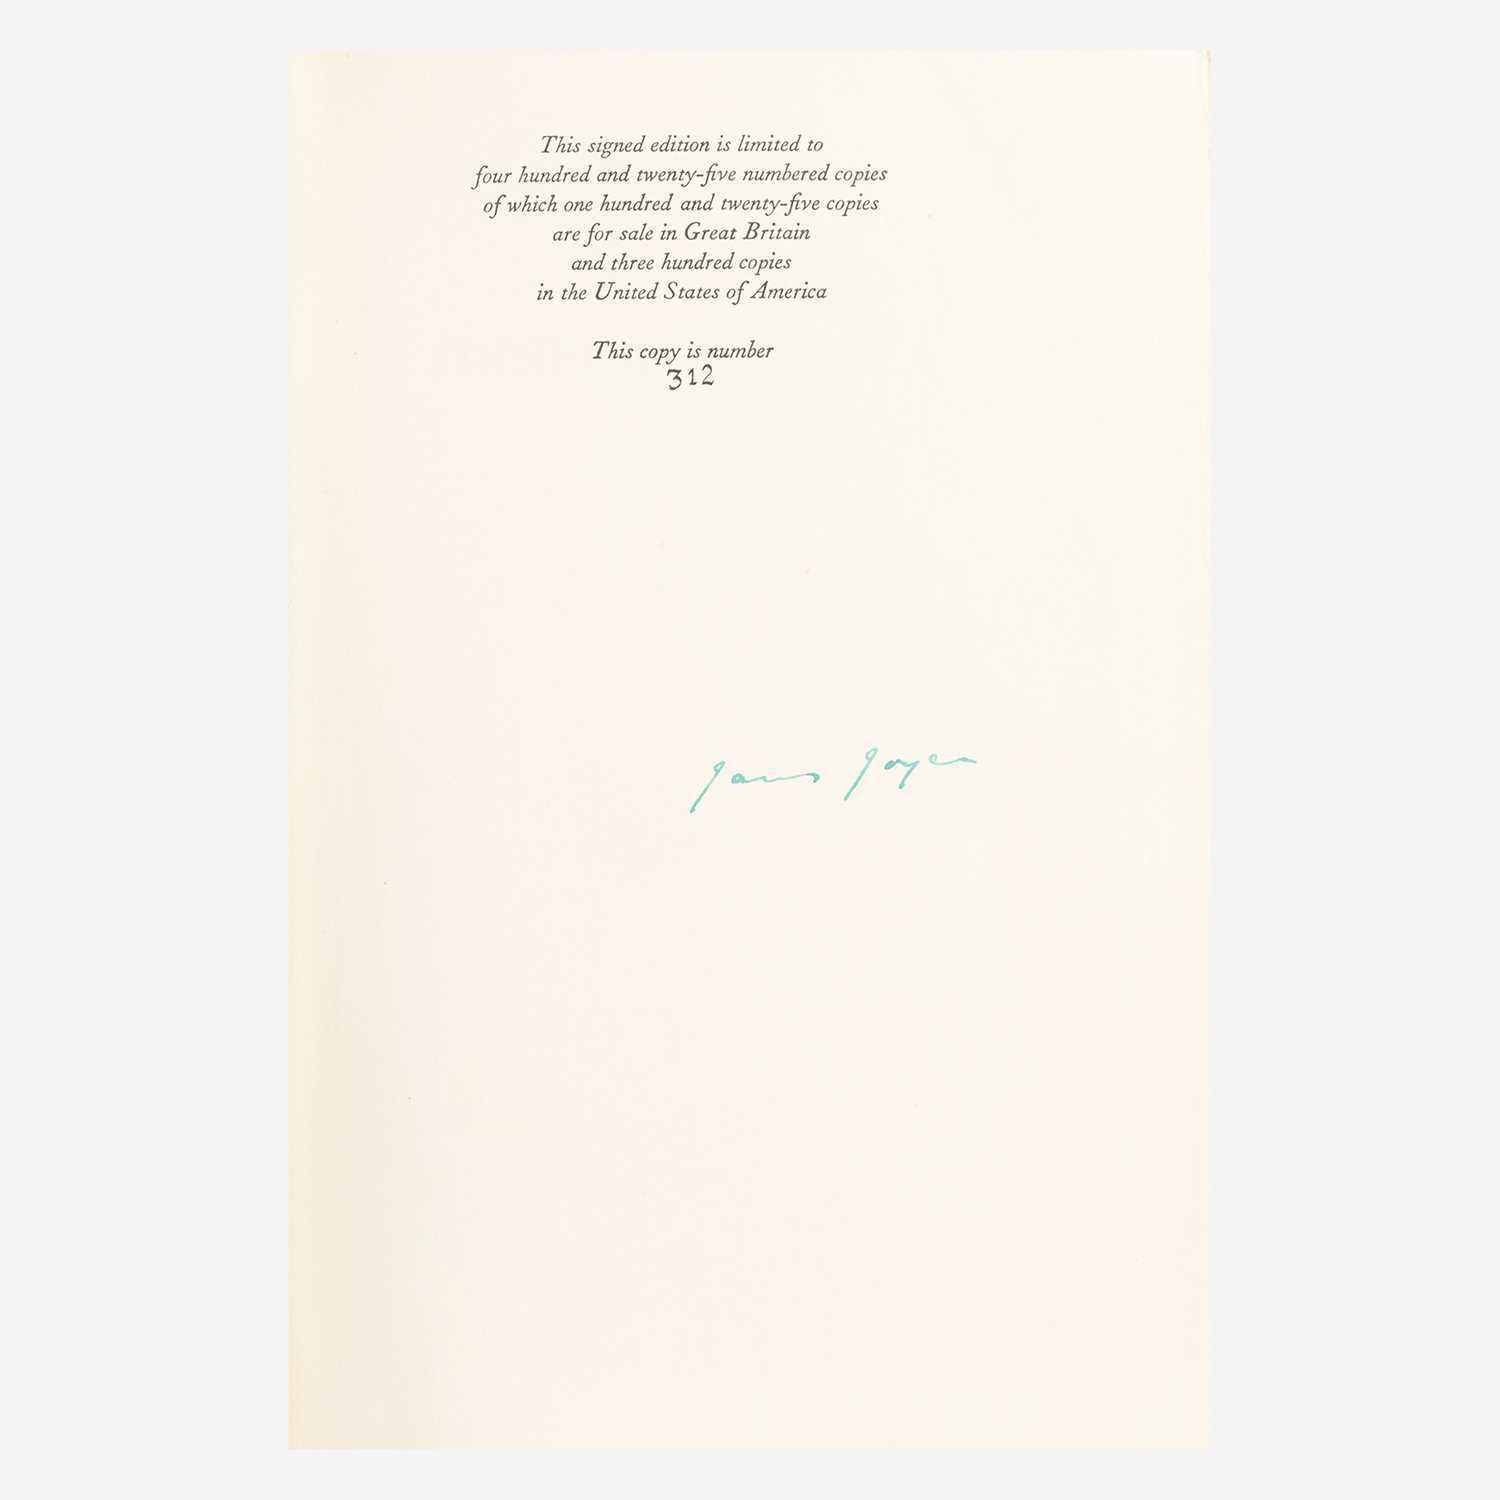 Lot 70 - [Literature] Joyce, James